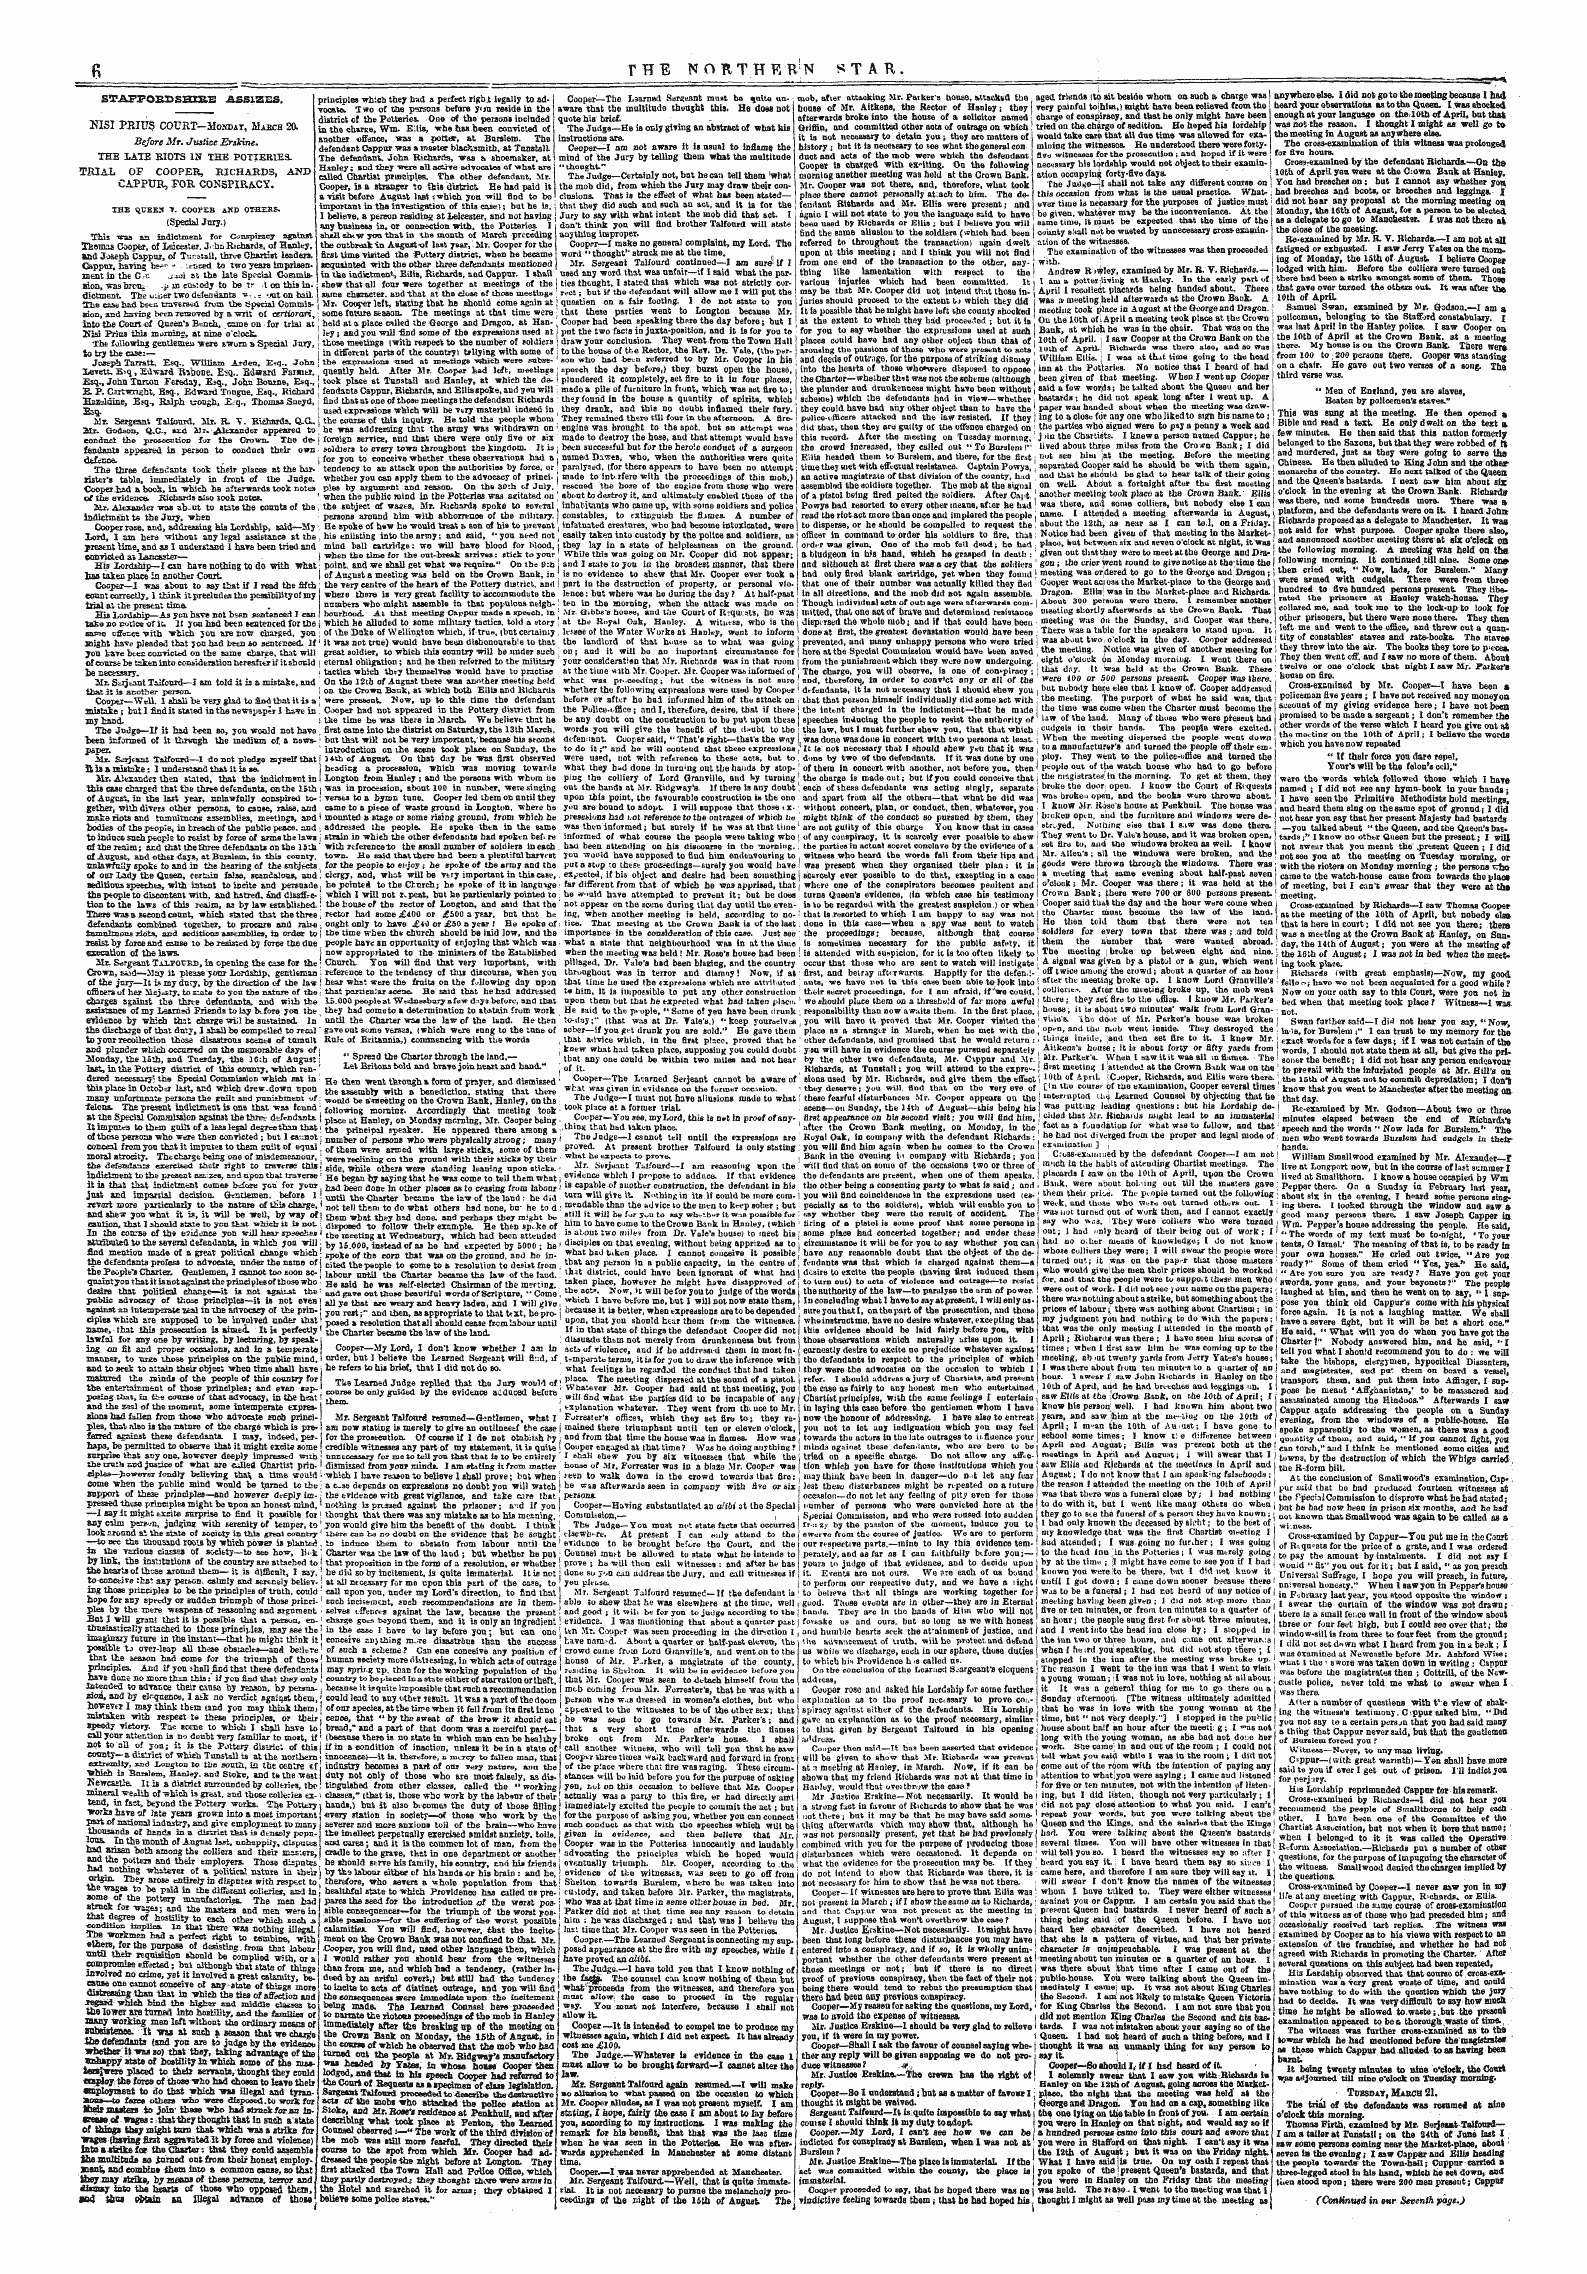 Northern Star (1837-1852): jS F Y, 5th edition: 6